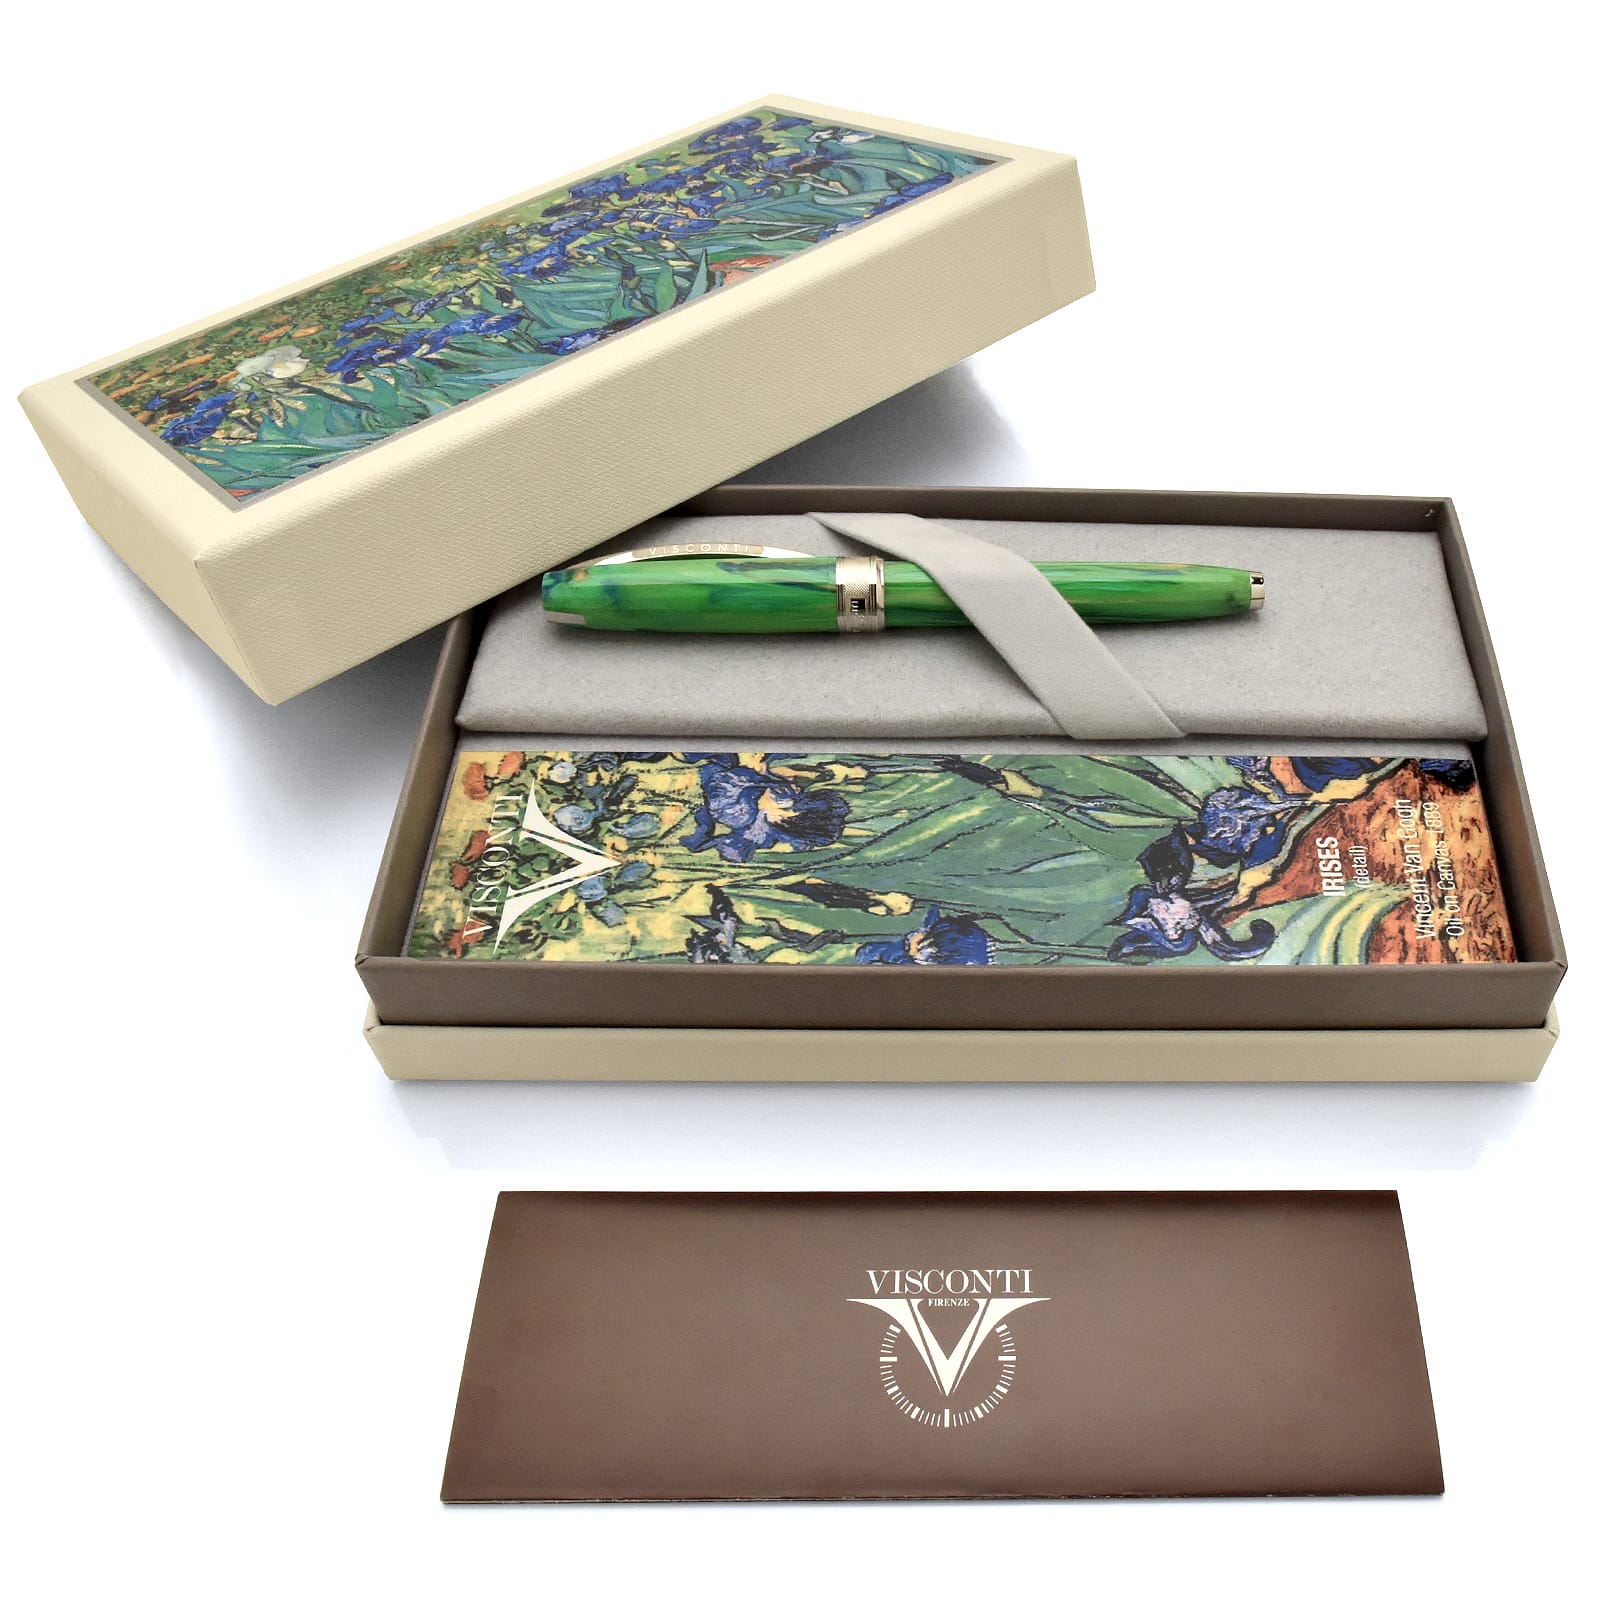 VISCONTI ビスコンティ 万年筆 ヴァンゴッホ アイリス | 世界の筆記具 